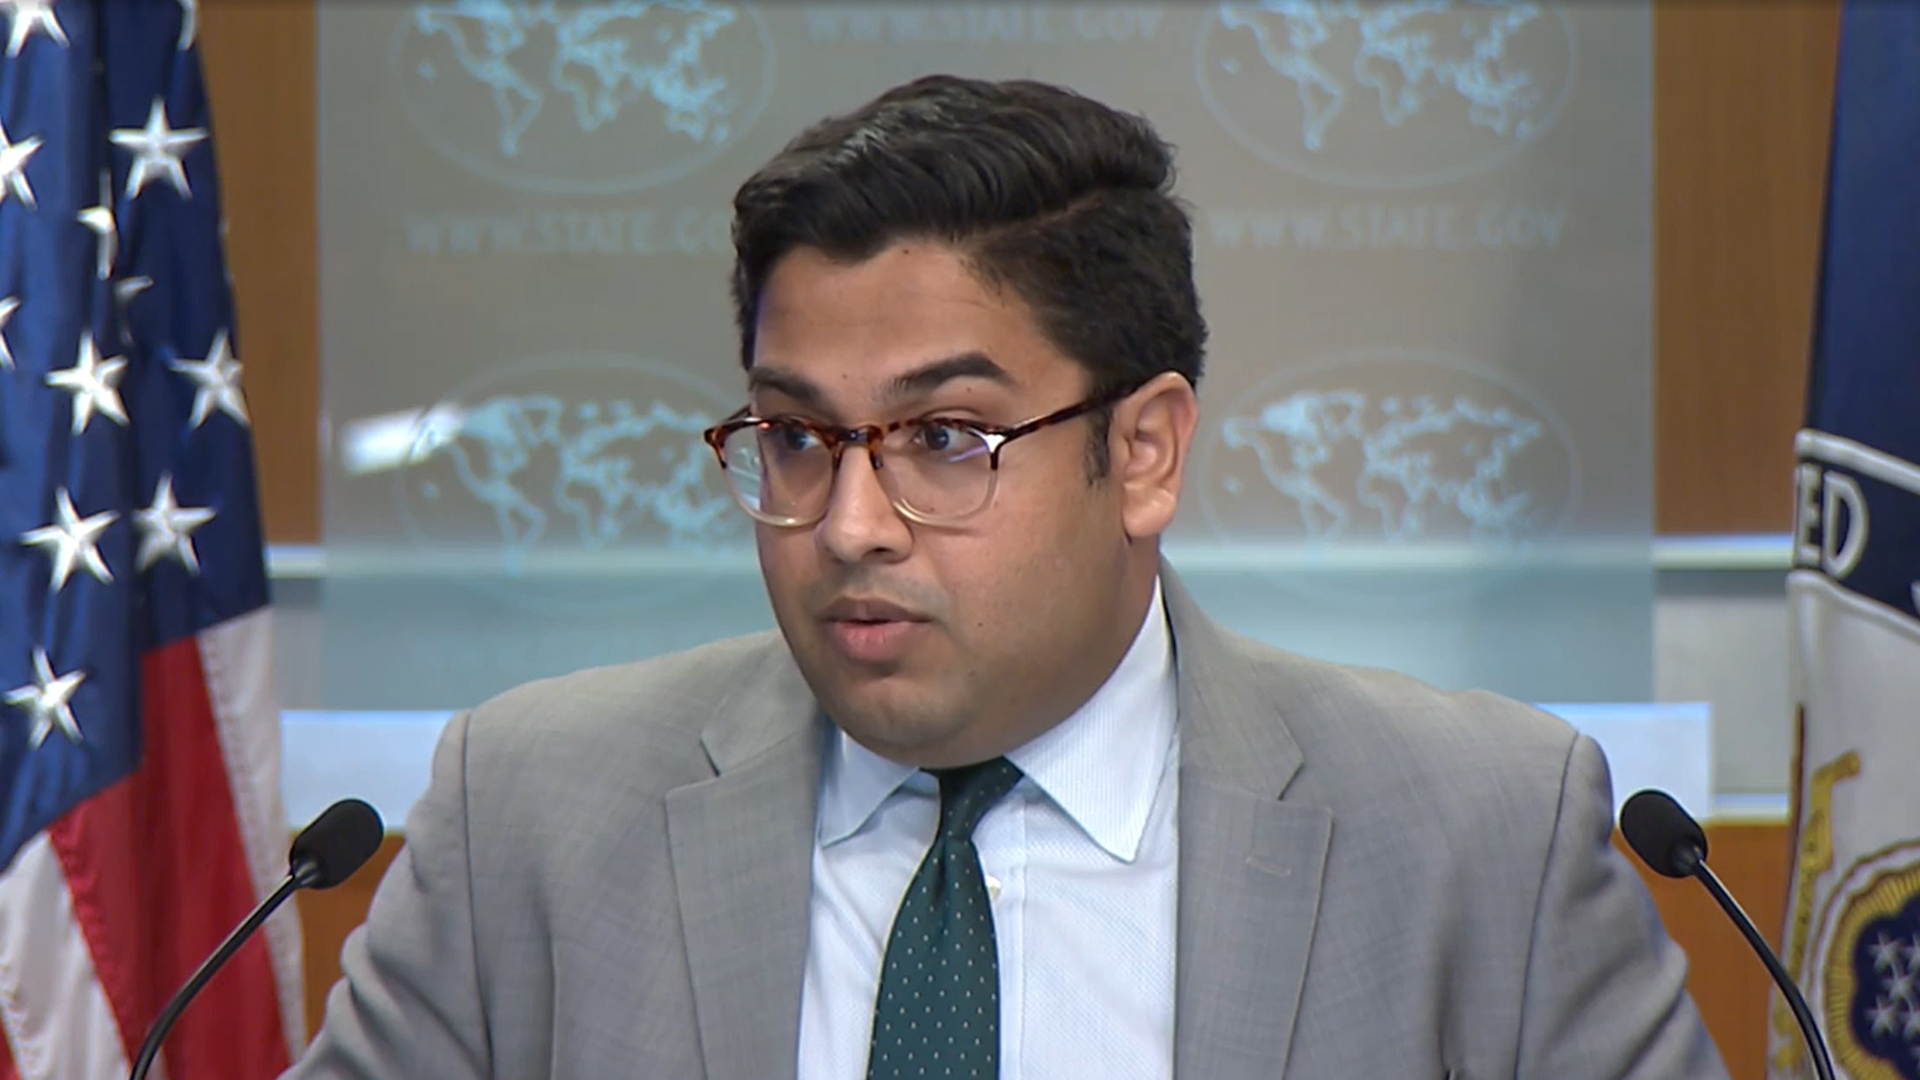 Vedant Patel, State Department Briefing, Principal Deputy Spokesperson. [Somoy TV]